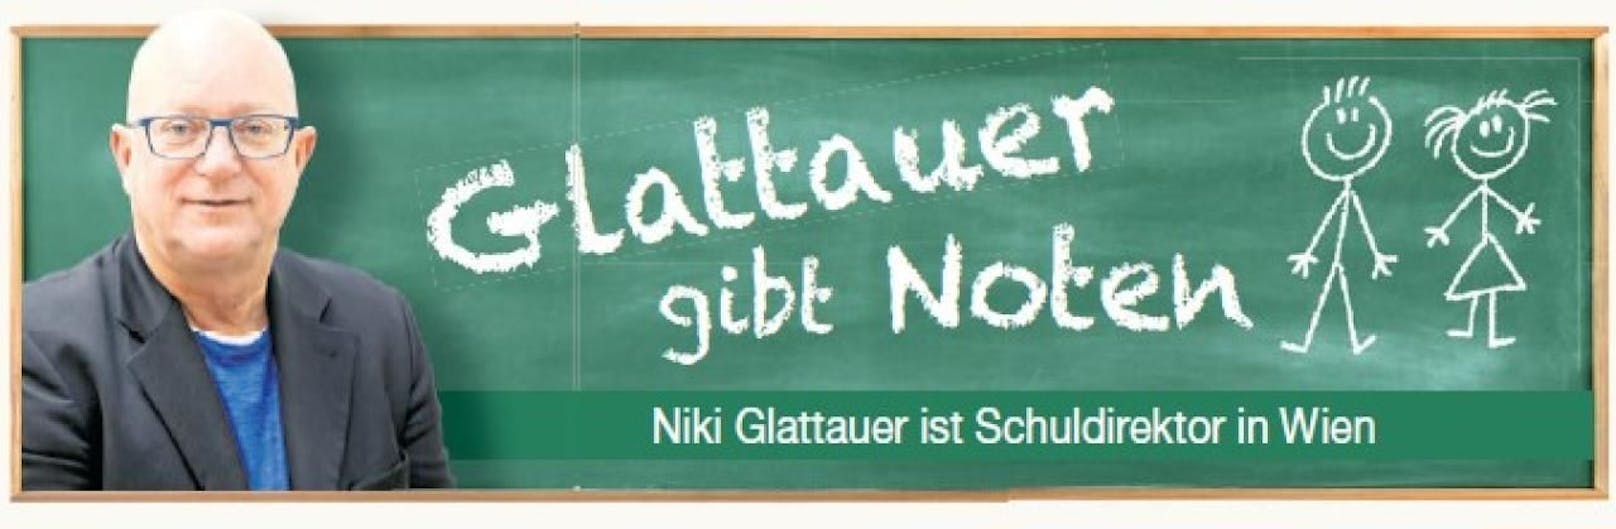 Glattauer gibt Noten: Die Kolumne jeden Montag in &quot;Heute&quot;.